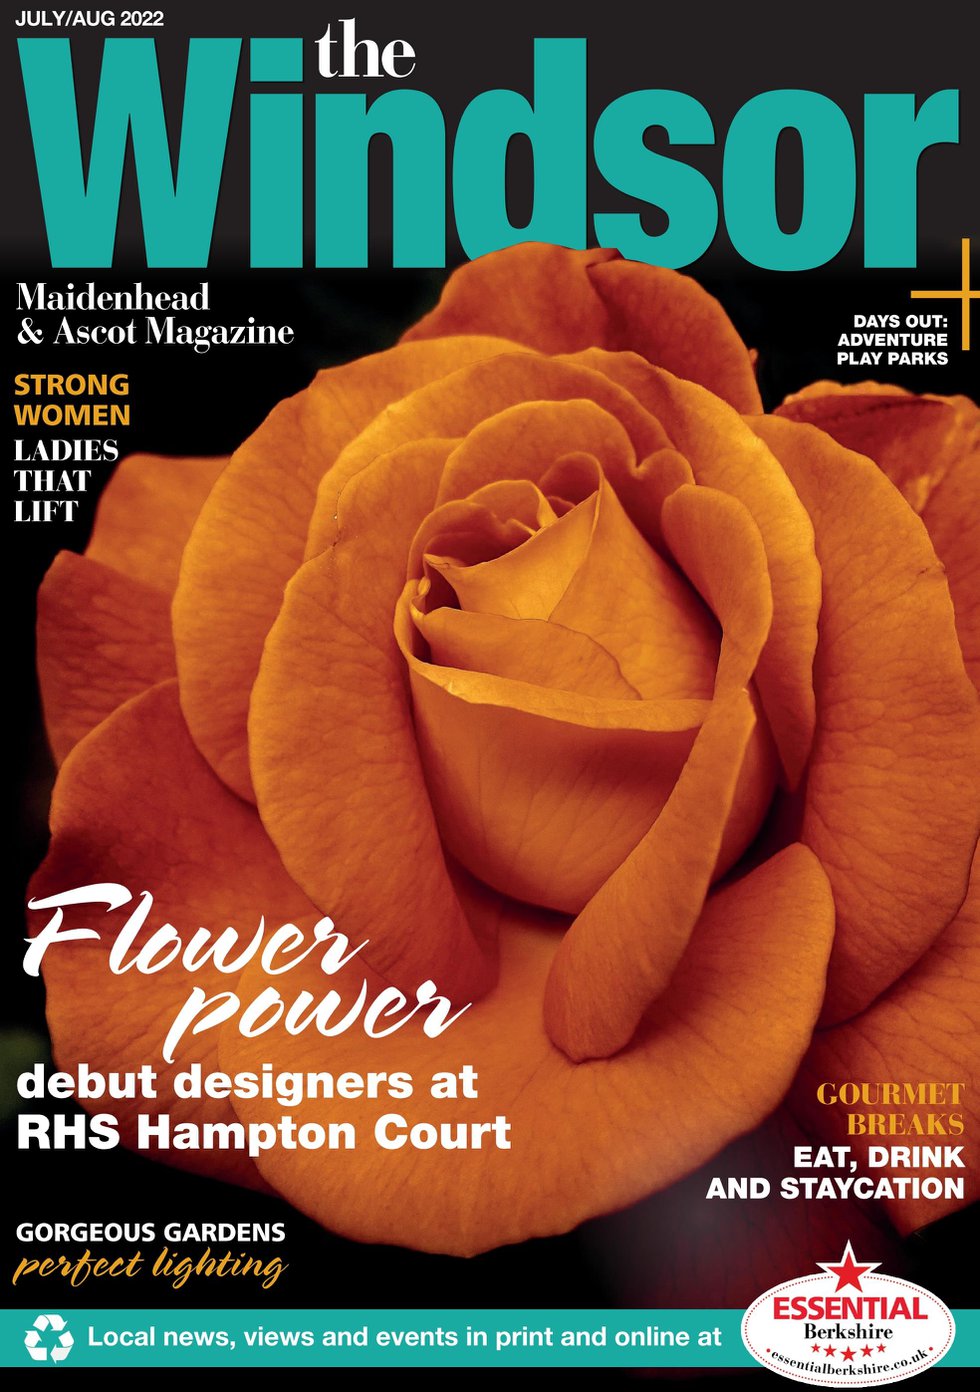 windsor-magazine-july-august-22